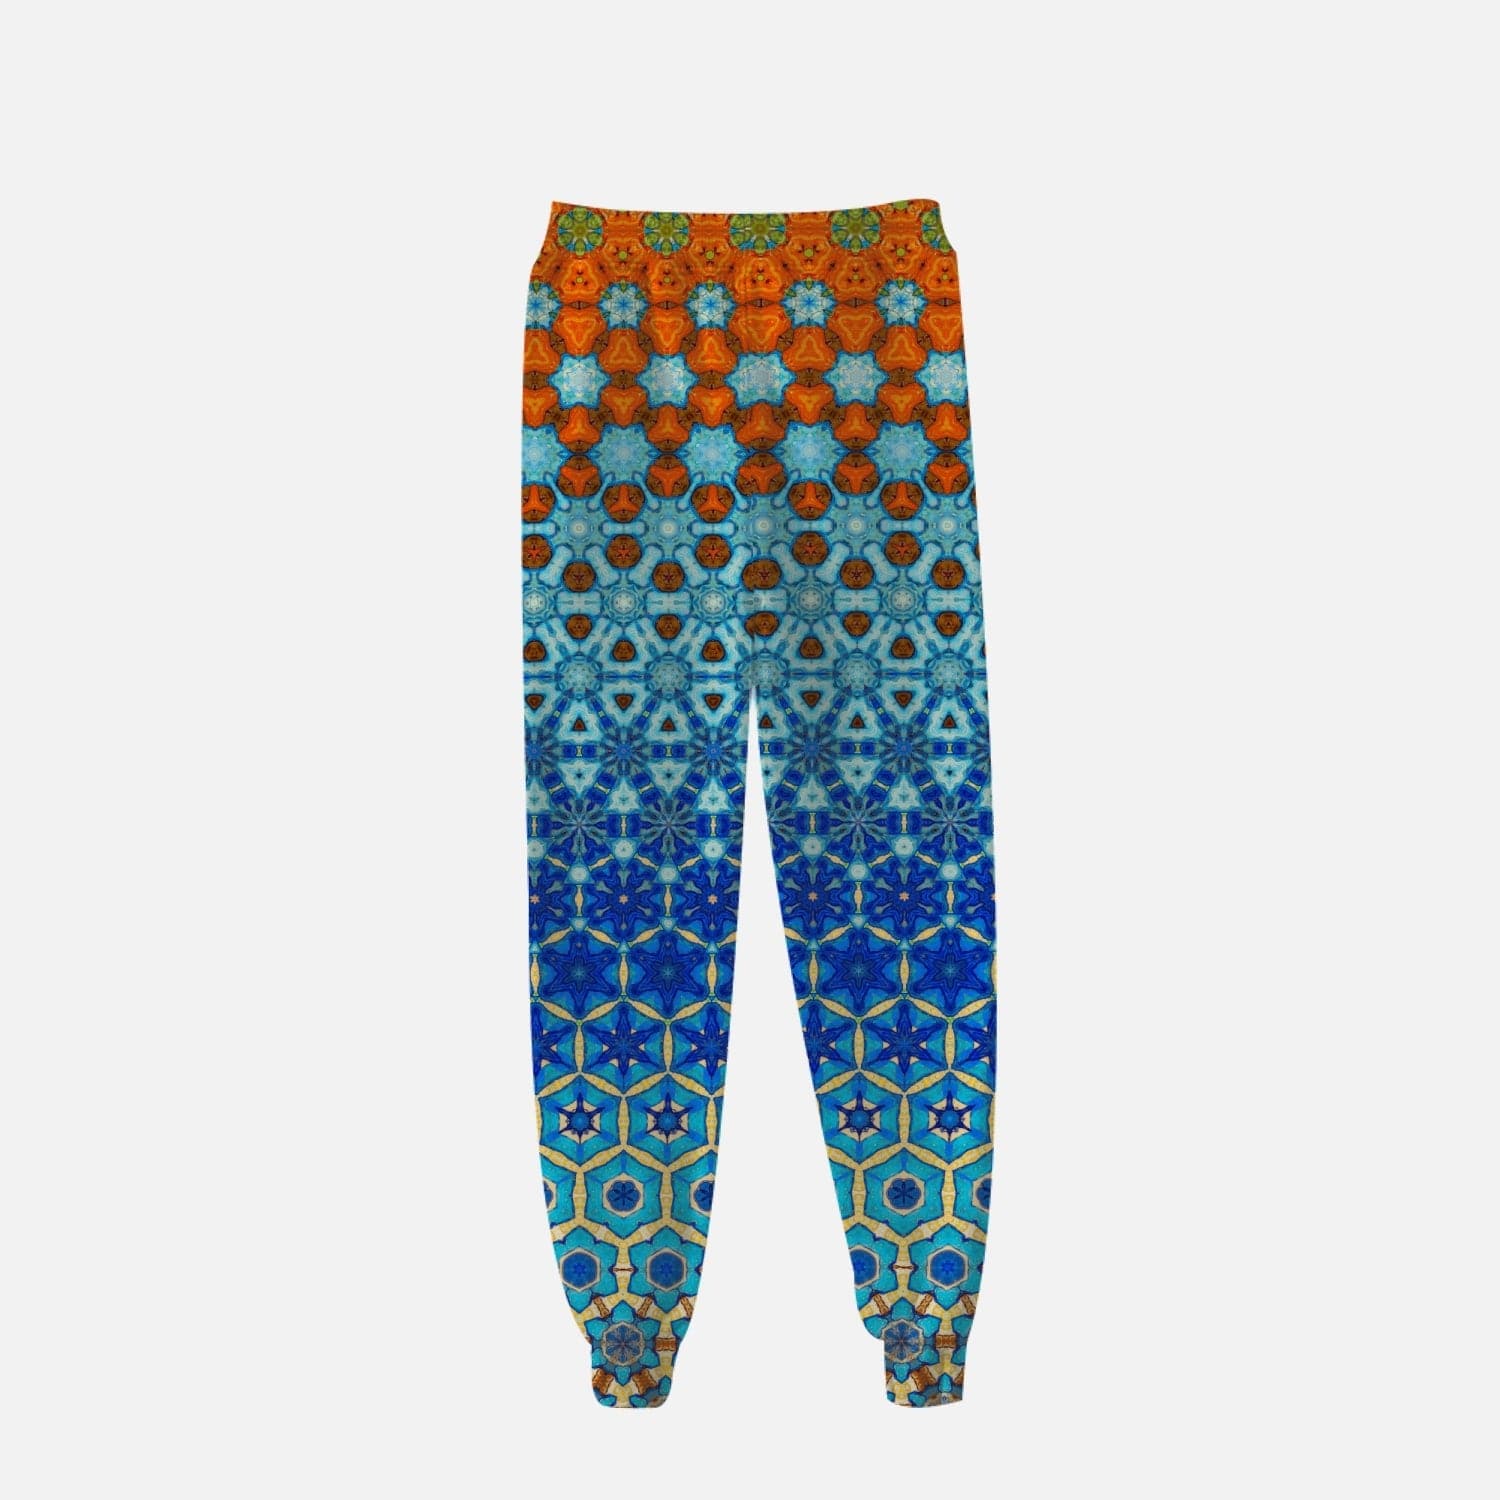 Orange and blue Joy! Mid-Rise Pocket Sweatpants, by Sensus Studio Design